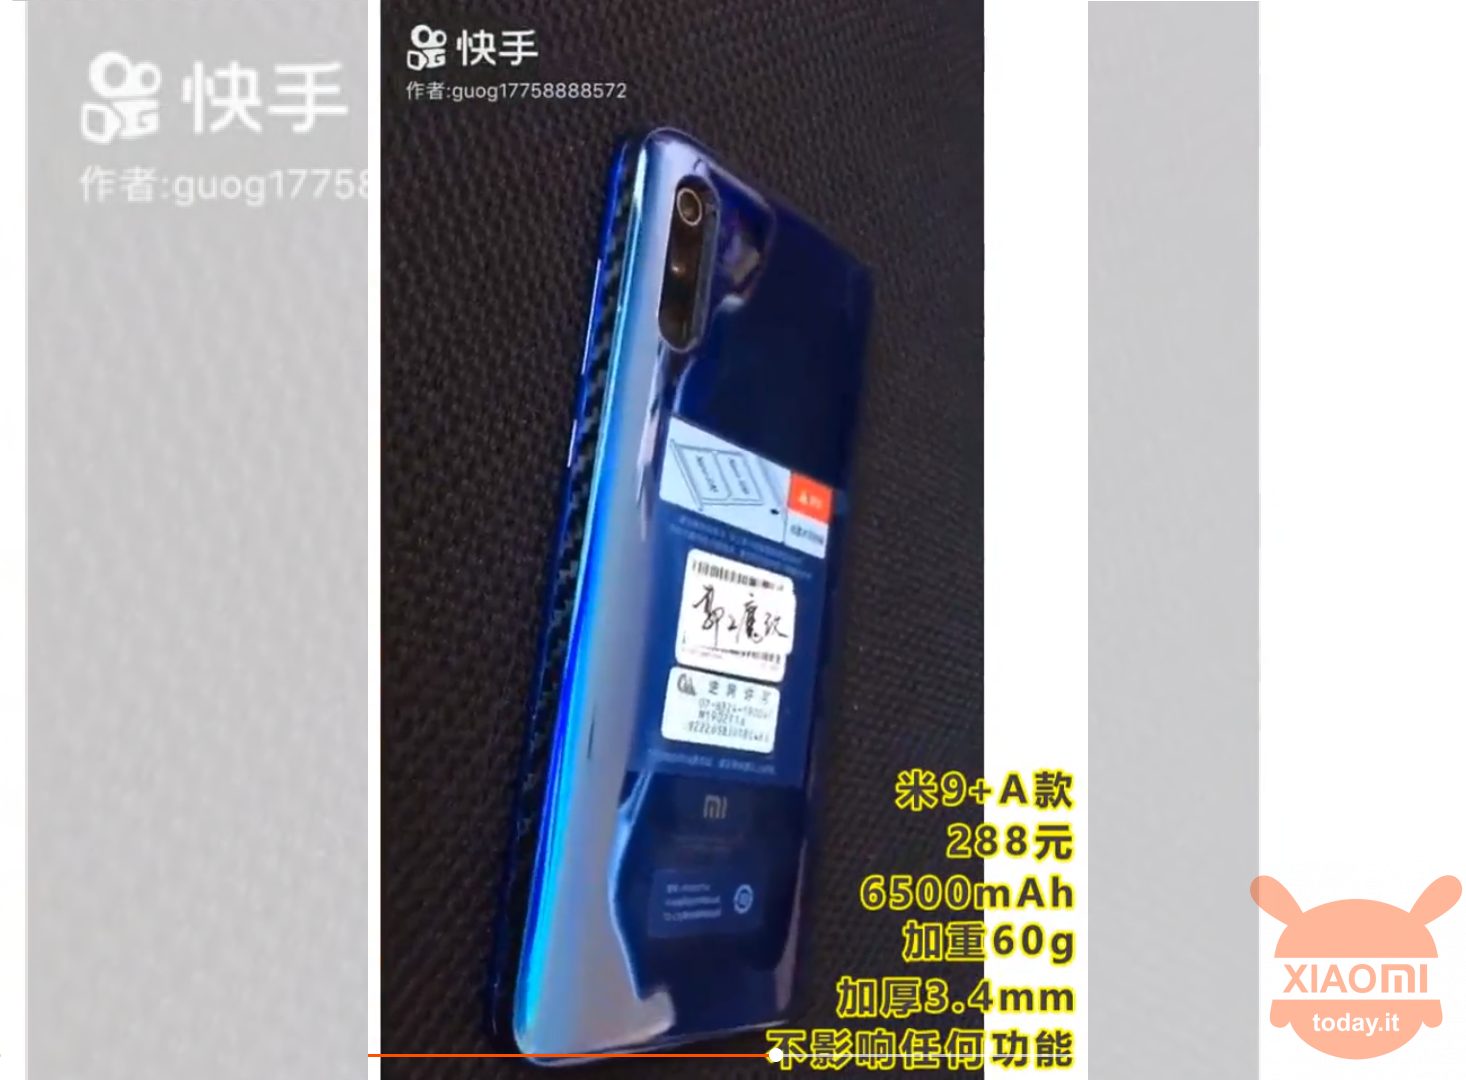 Xiaomi Mi 9 6500mAh battery